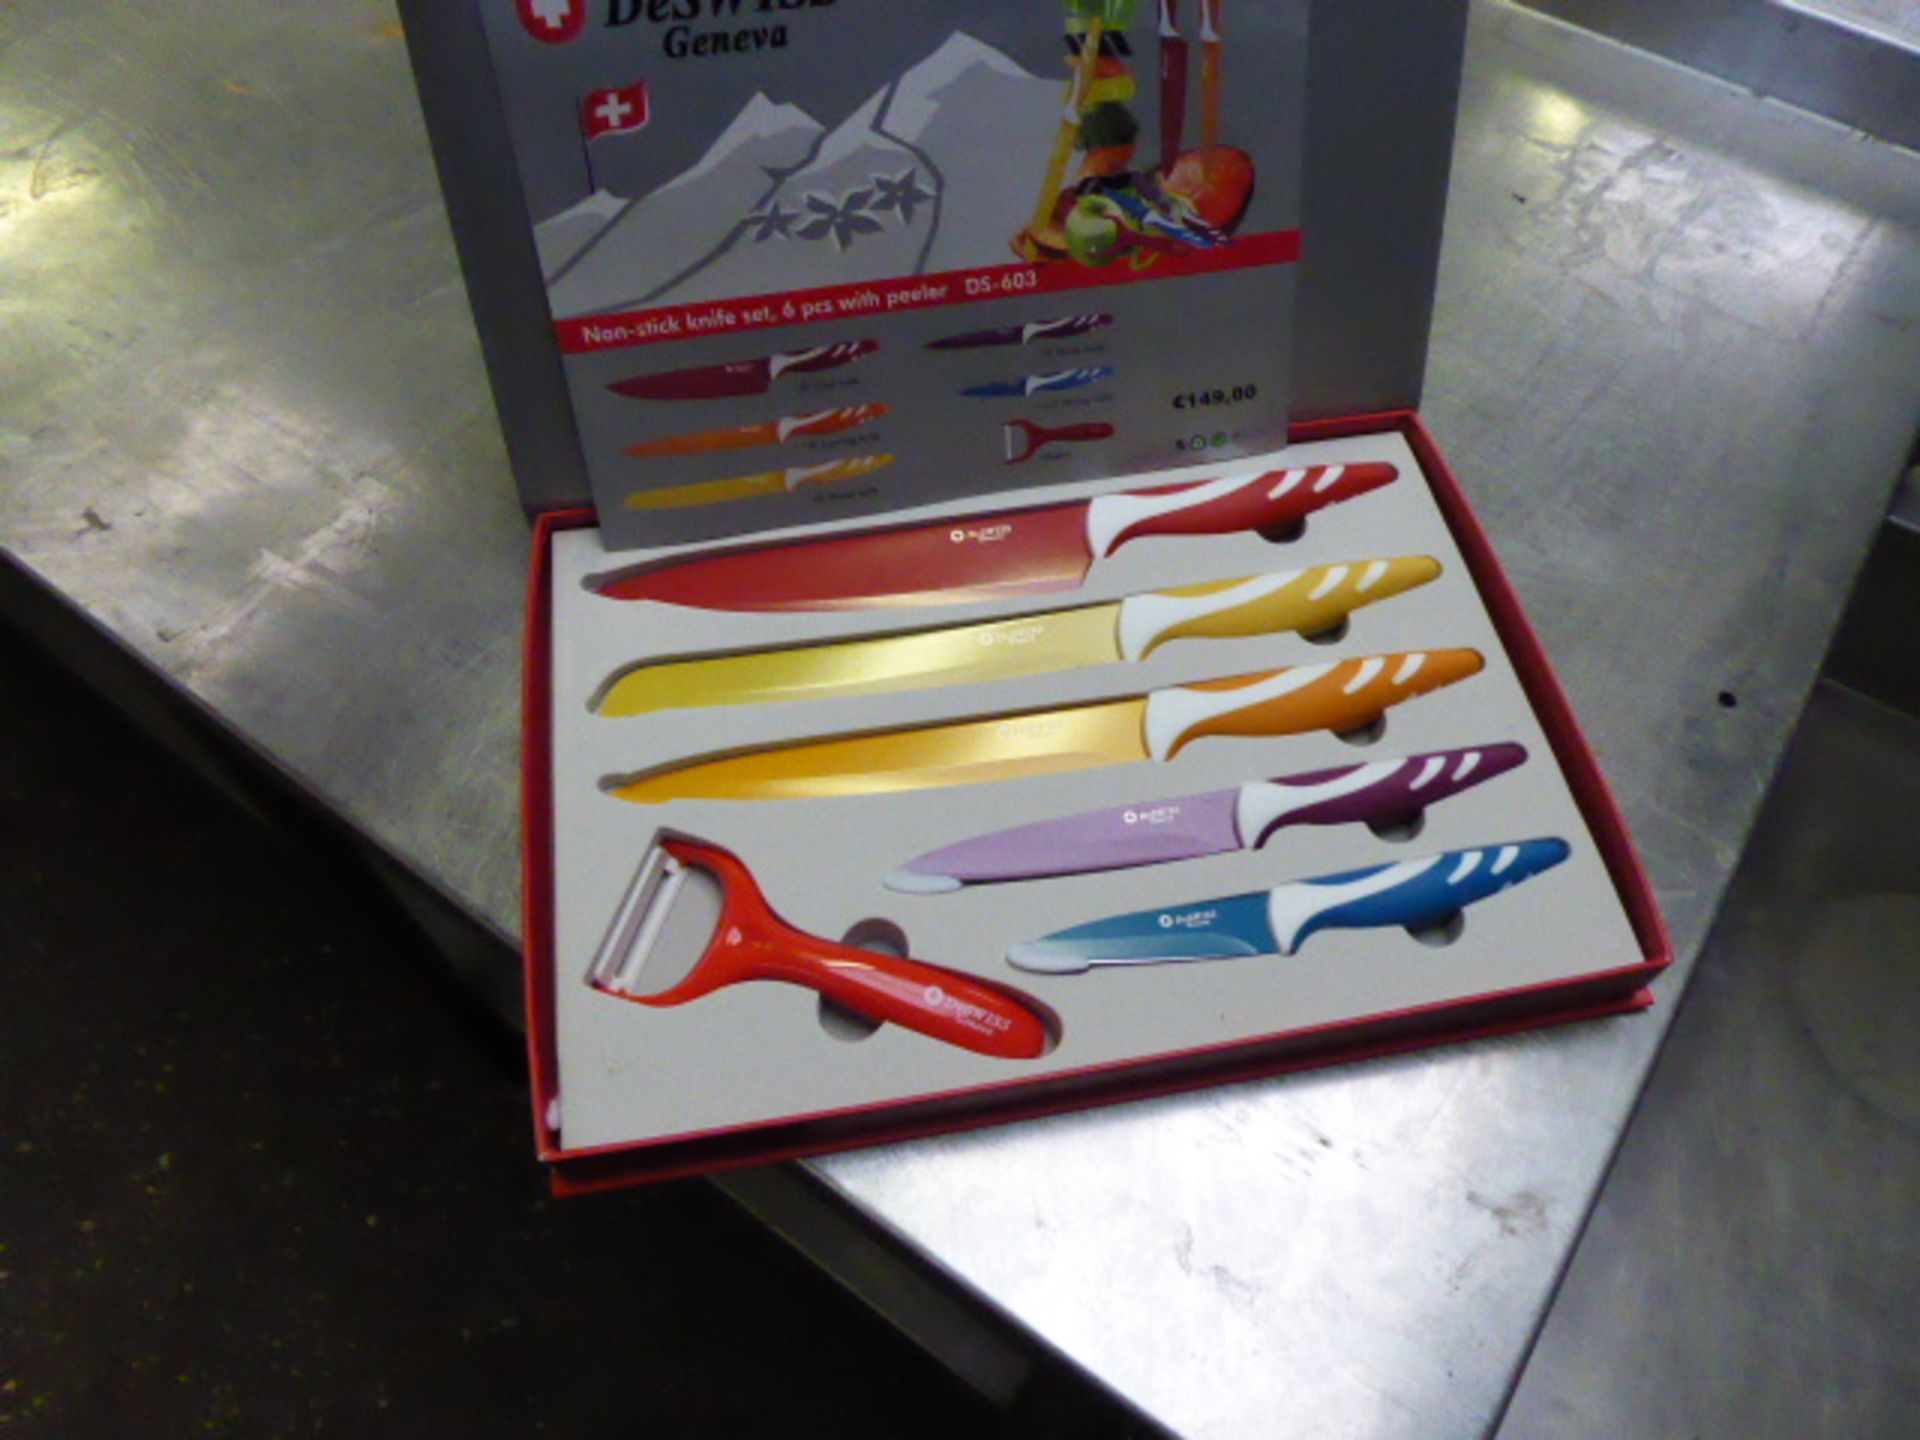 DeSwiss 6 piece colourful knife set